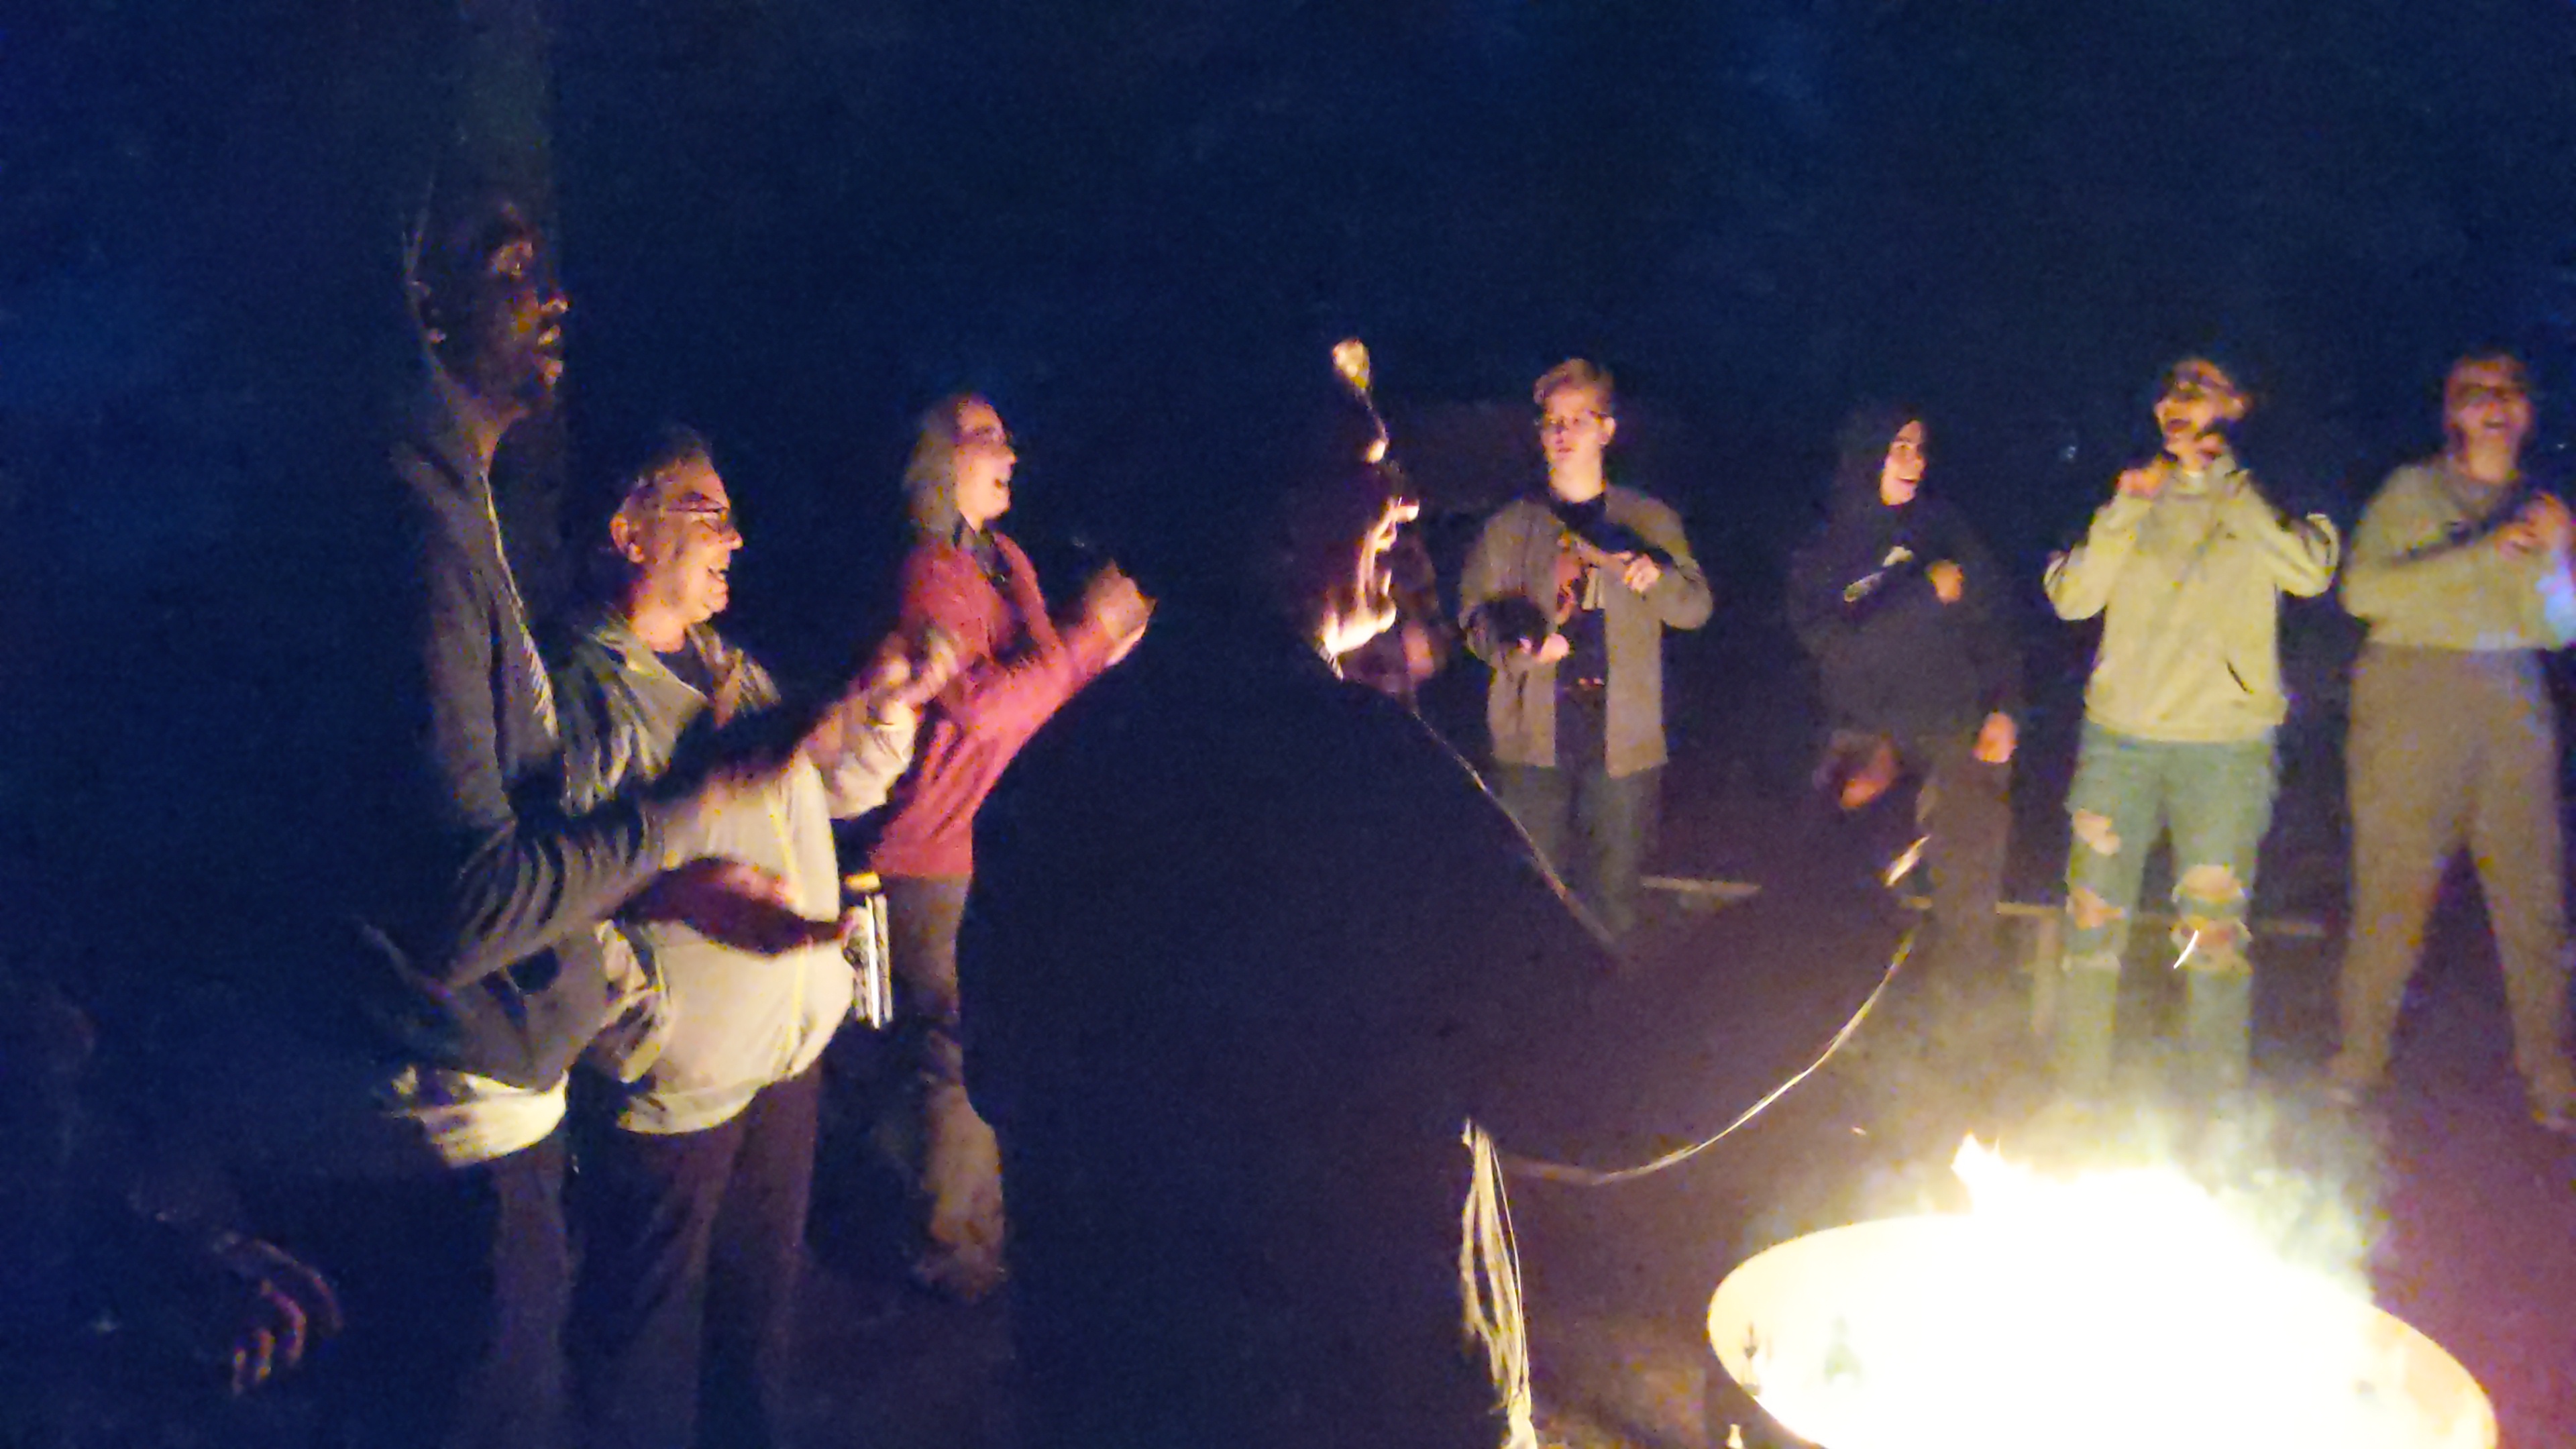 Singing around a campfire